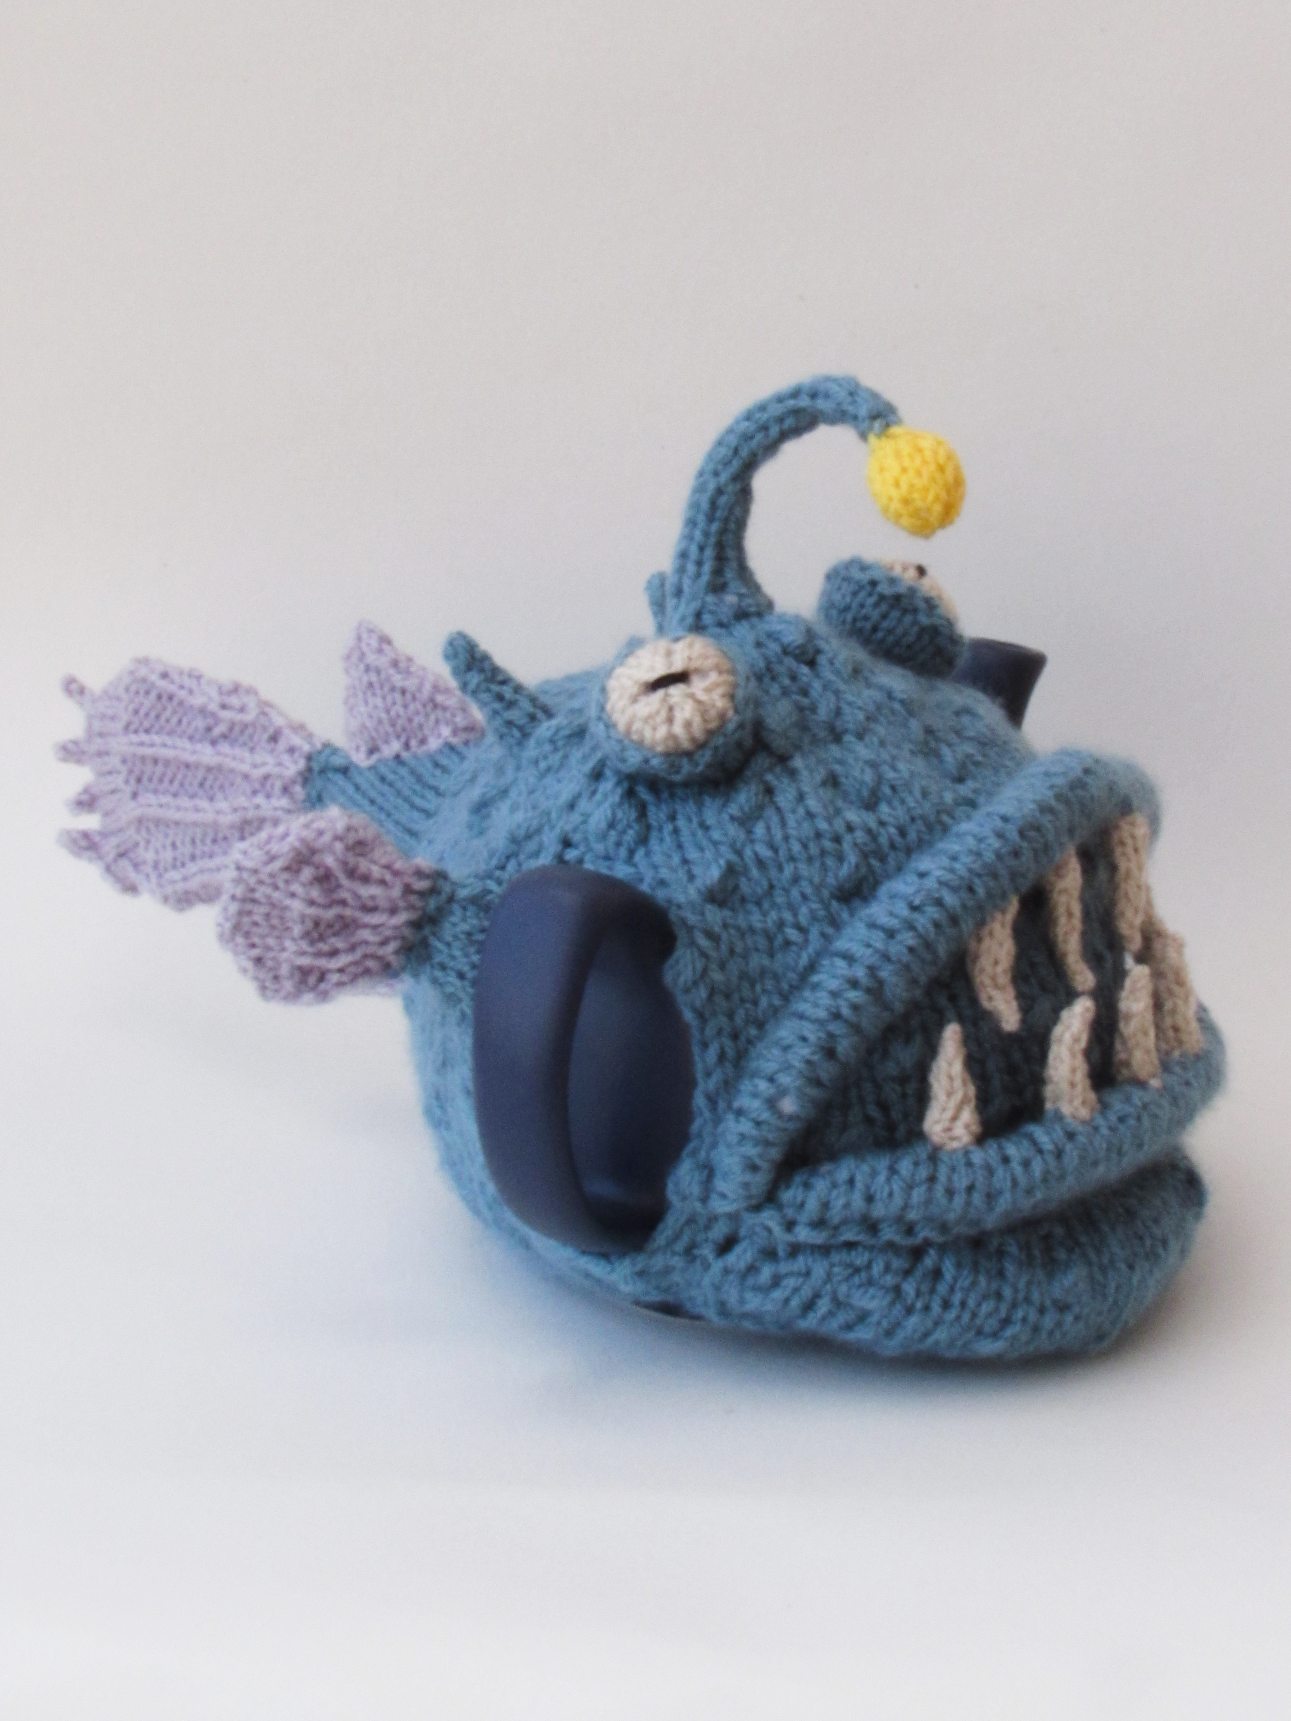 Angler Fish tea cosy knitting pattern